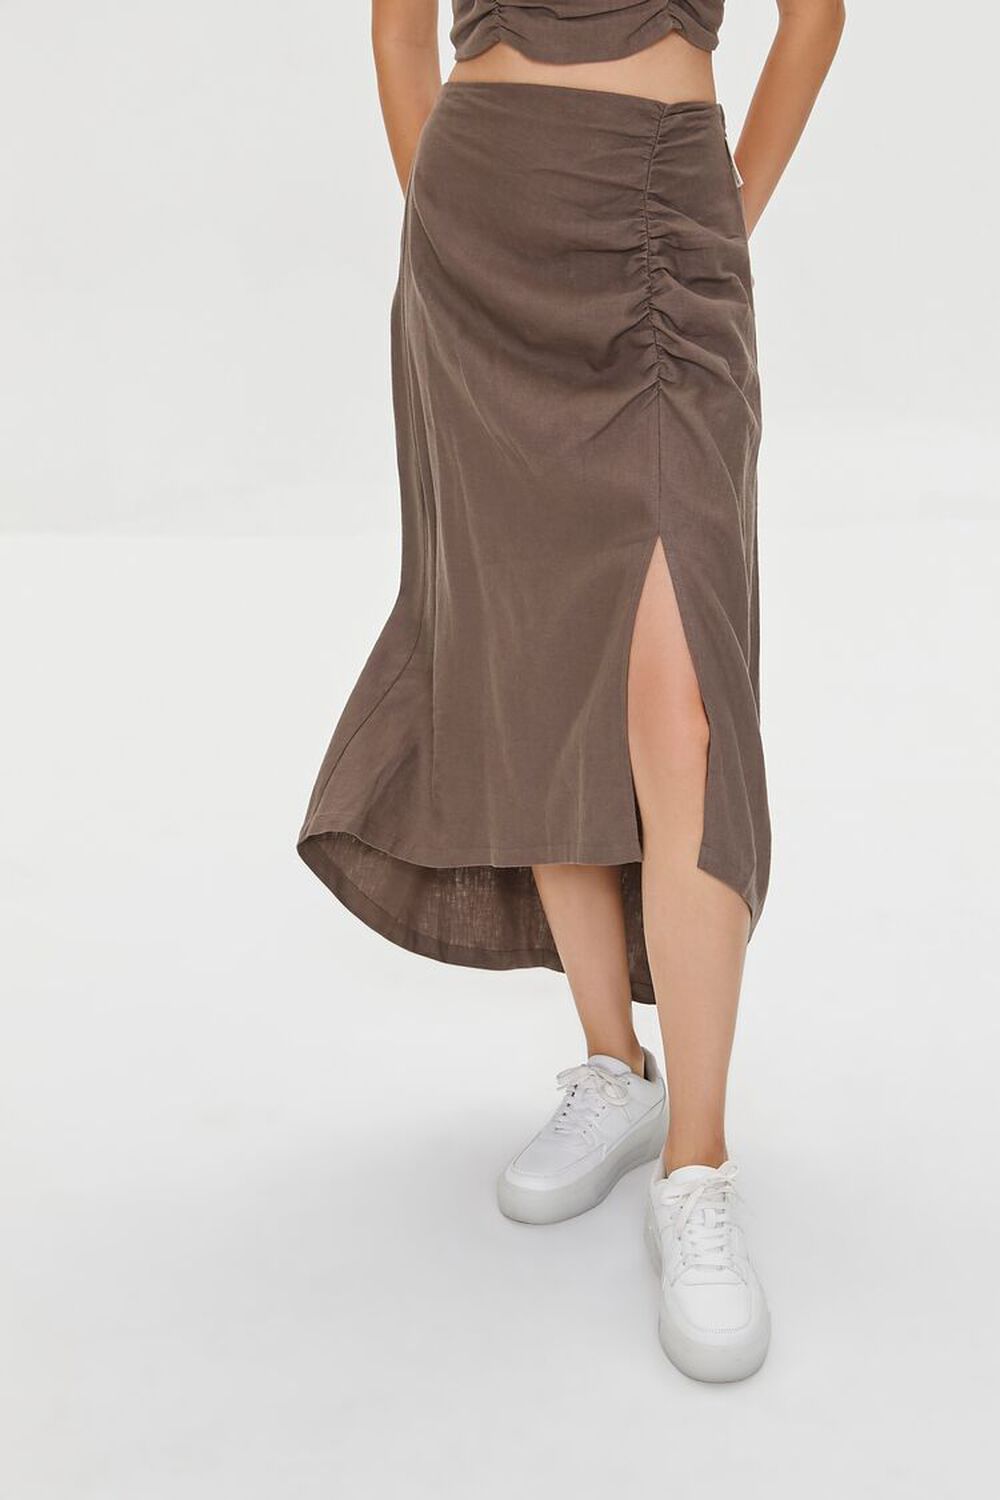 TAUPE Kendall + Kylie Linen-Blend Skirt, image 2